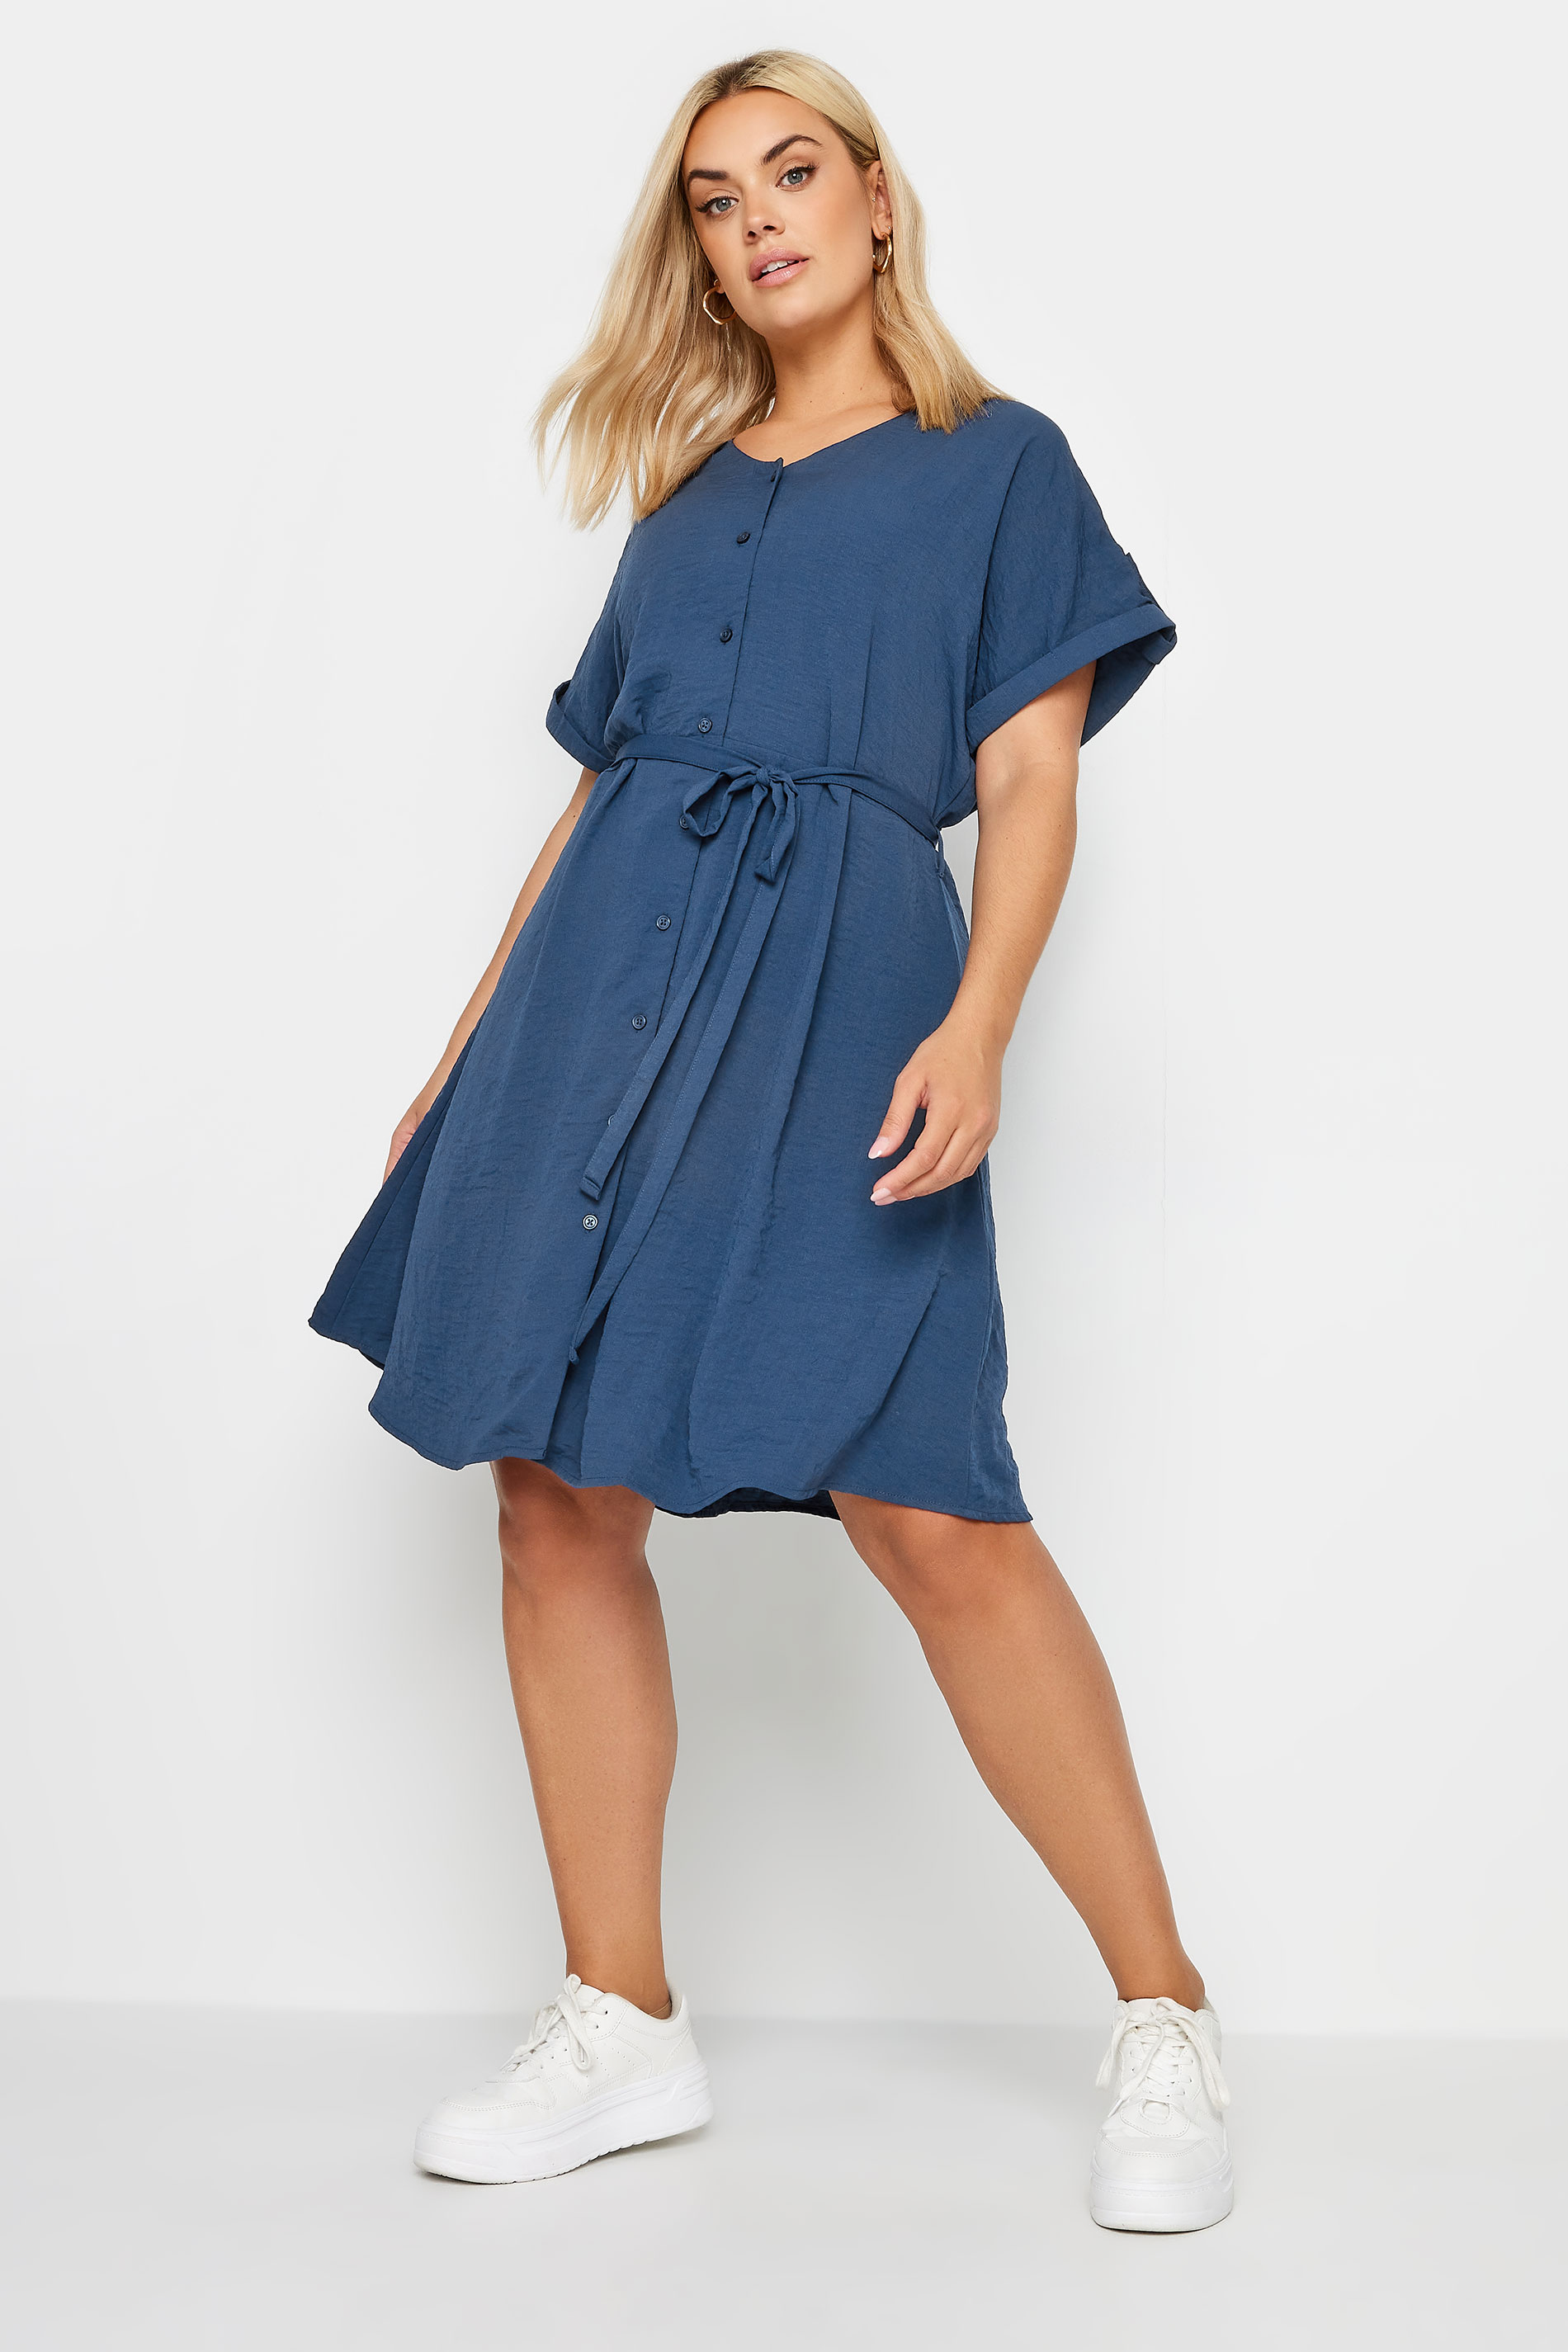 YOURS Plus Size Navy Blue Utility Shirt Mini Dress | Yours Clothing  2